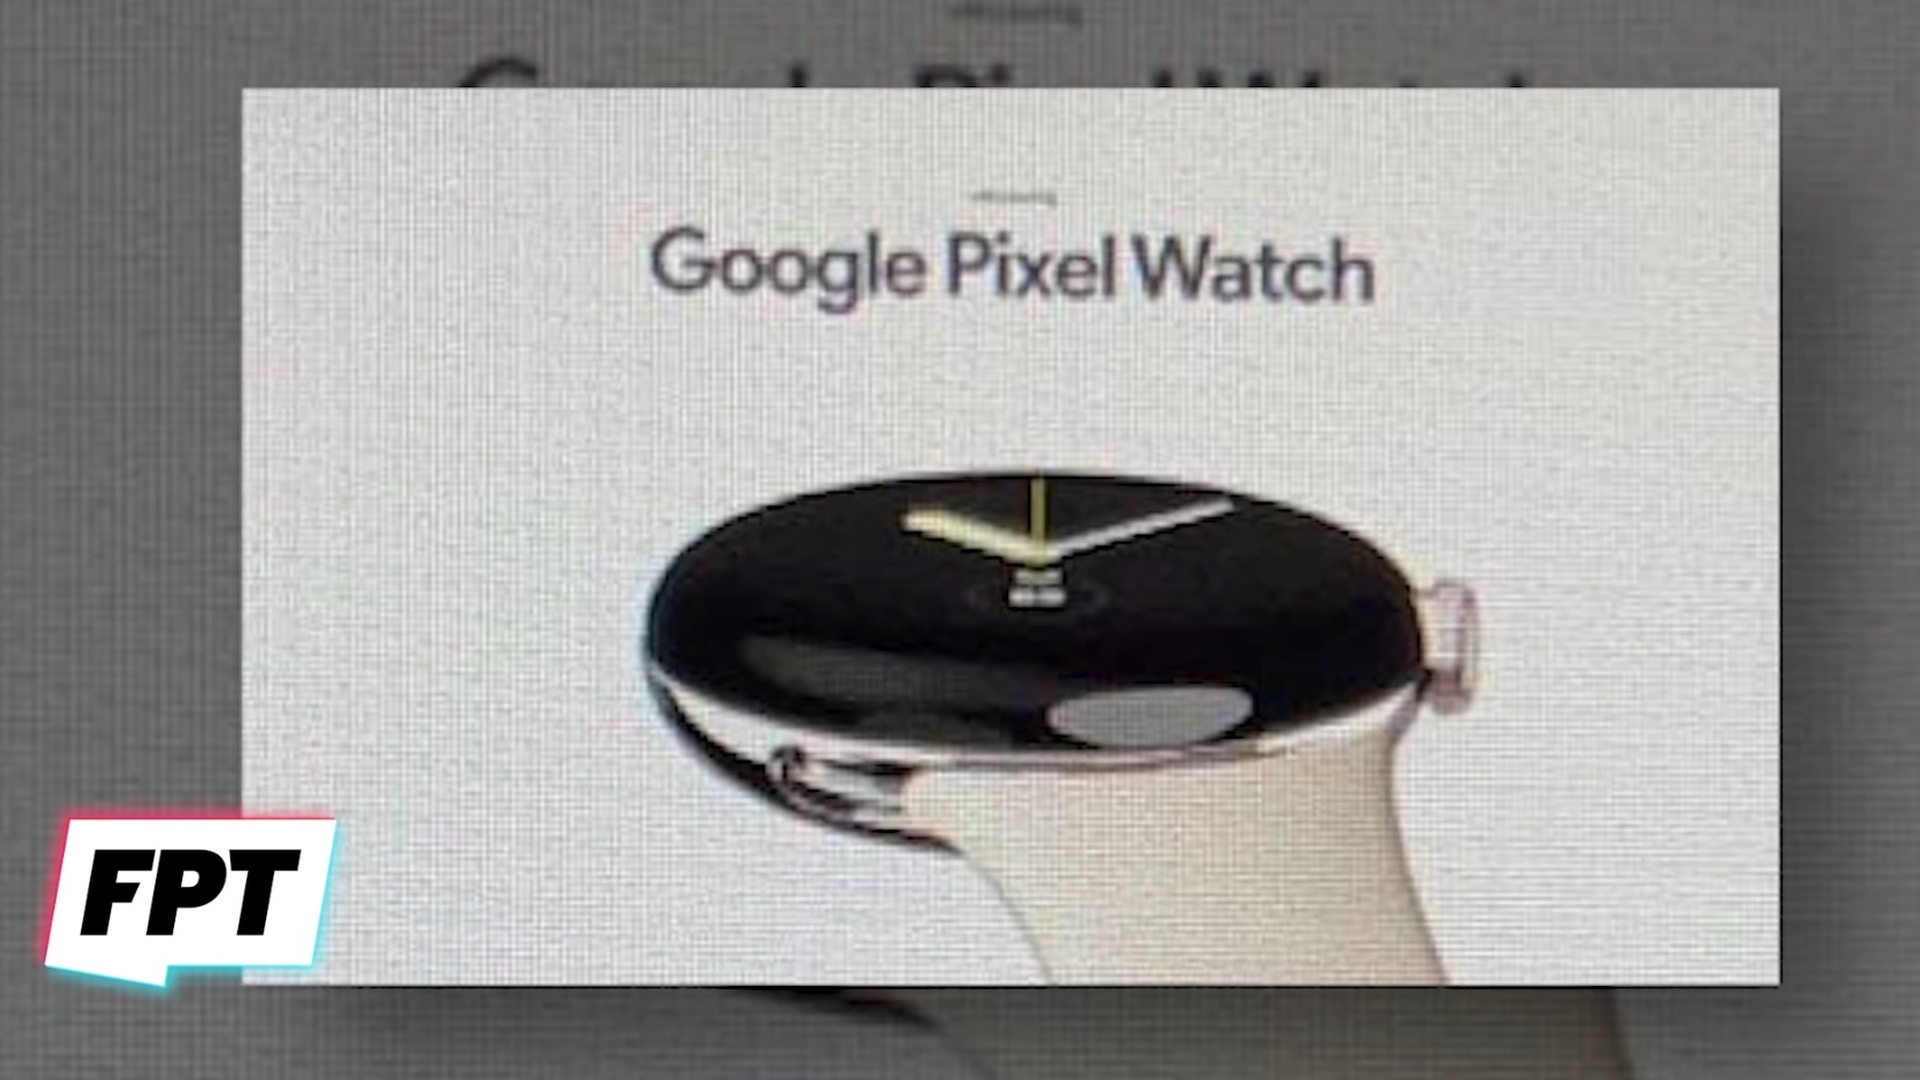 google pixel watch prosser marketing image 1